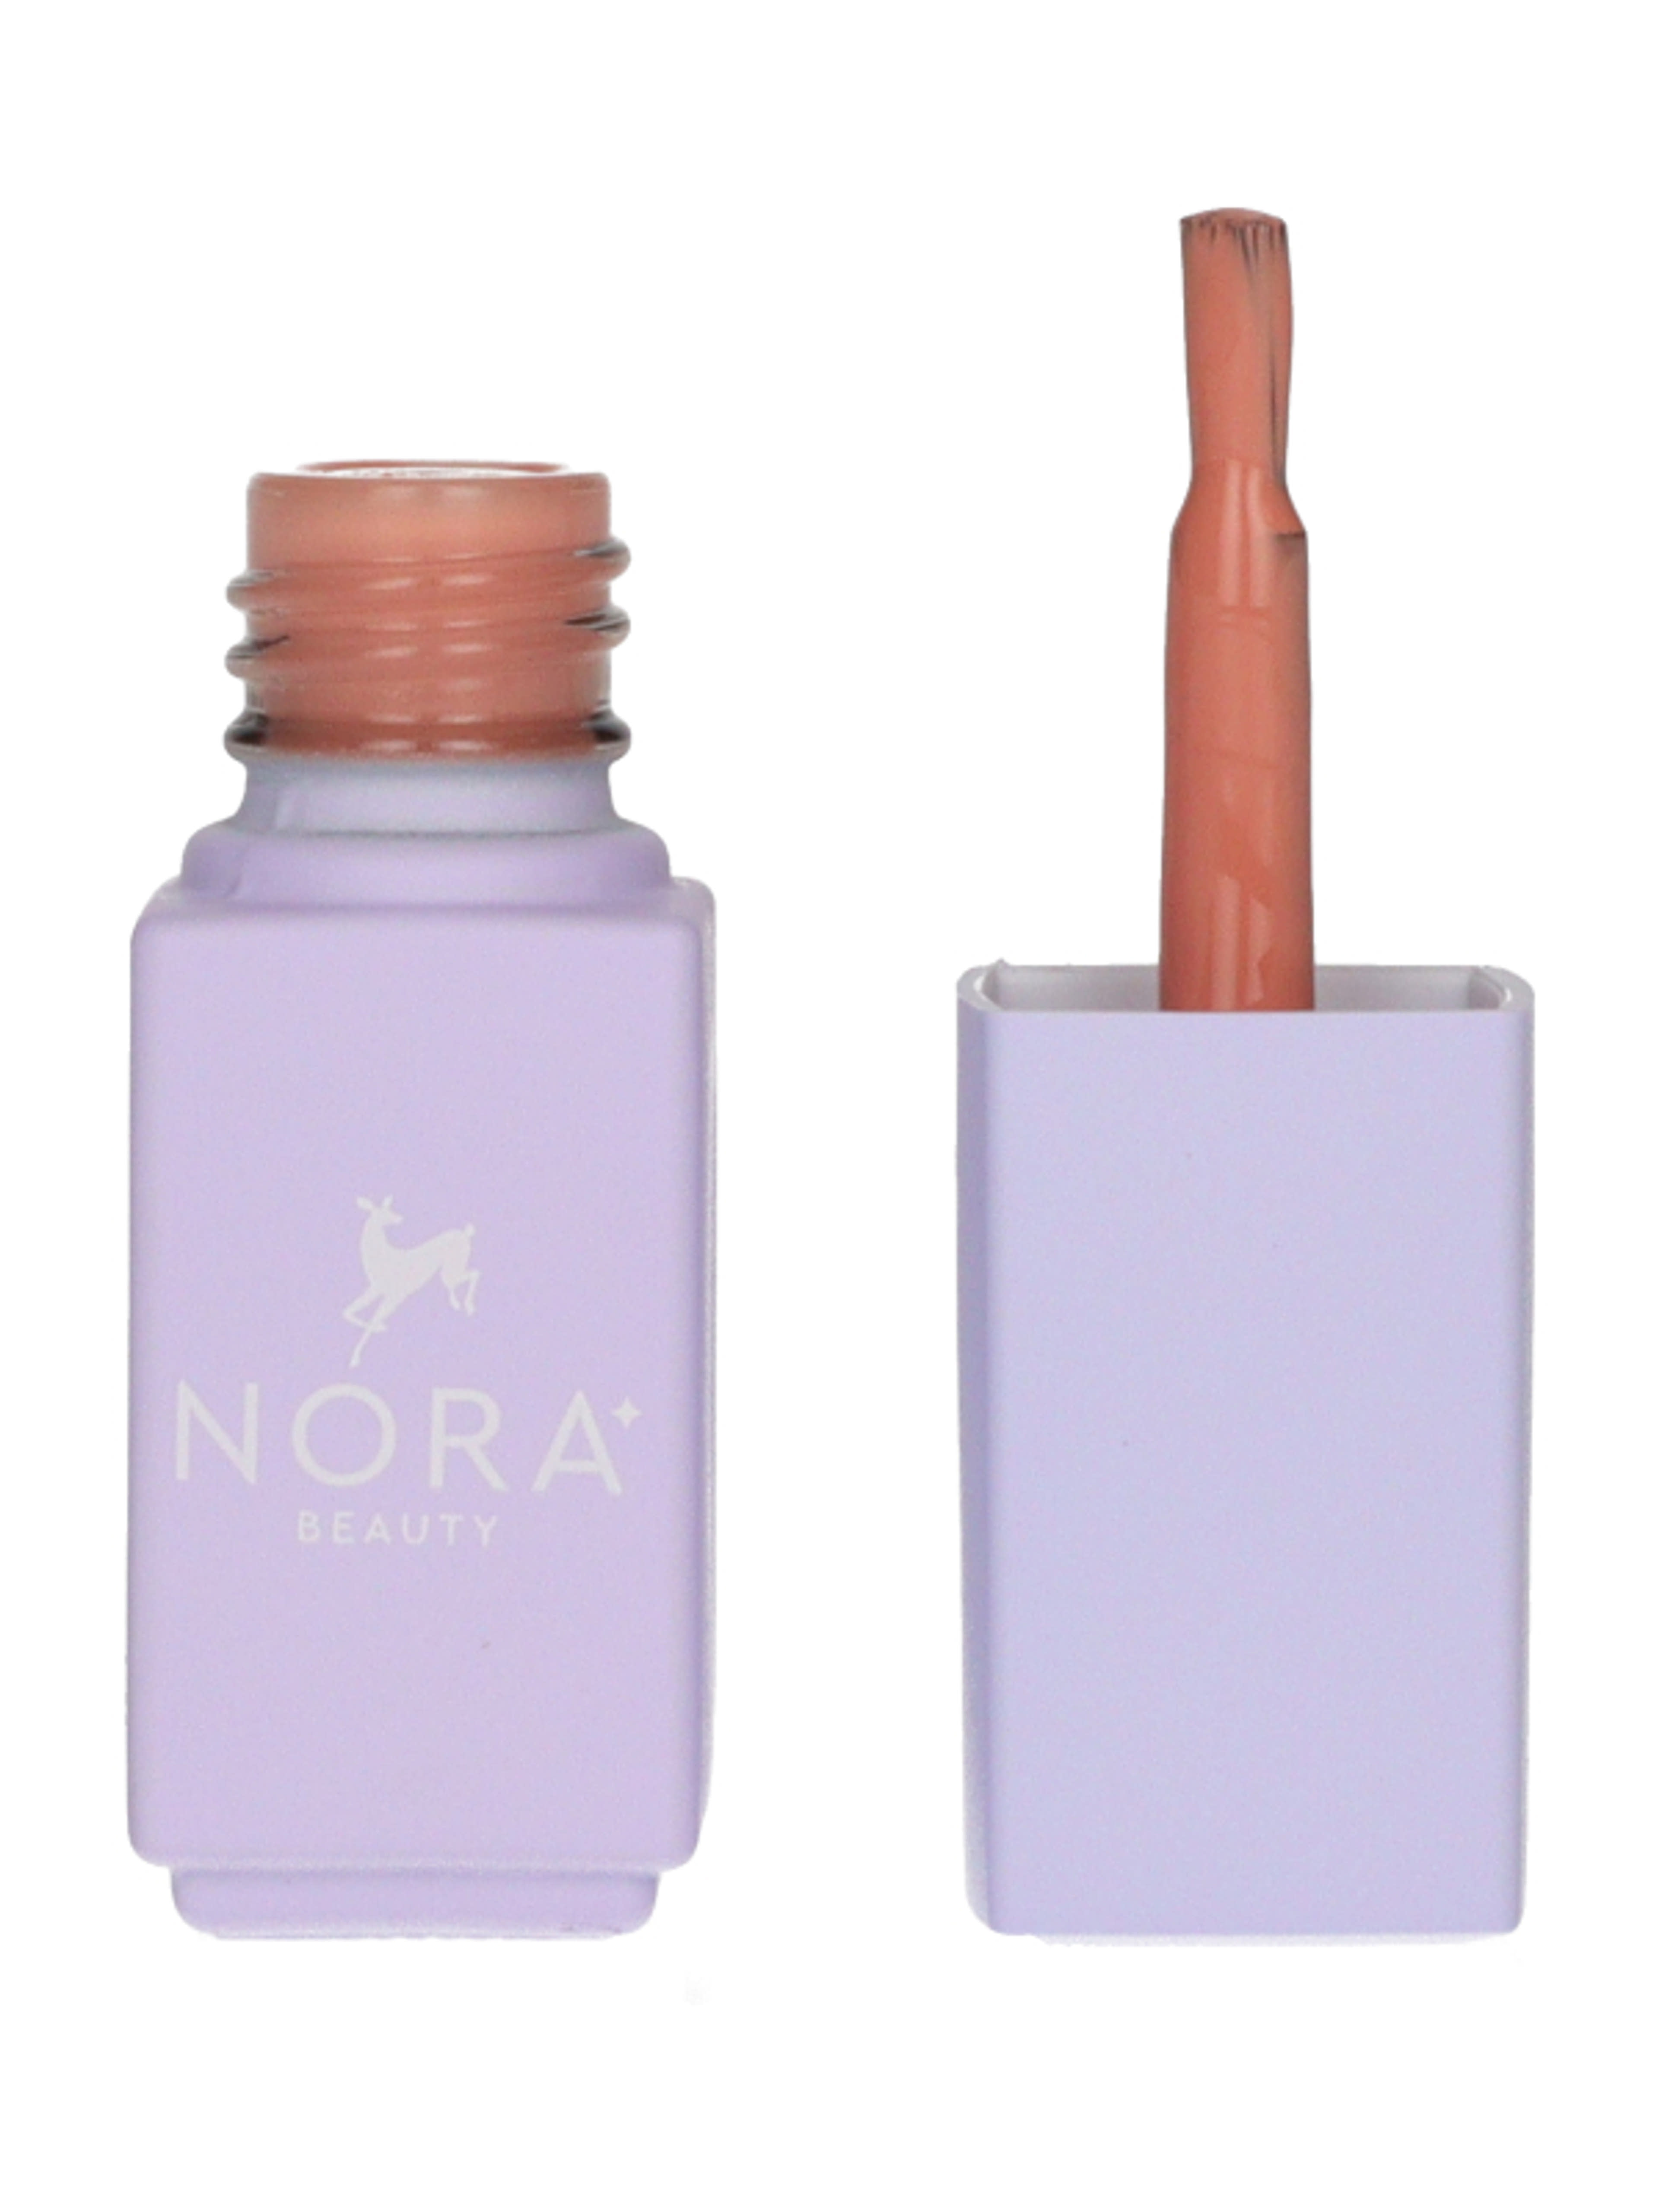 Nora Beauty UV lakkzselé /hd-02 peach perfecti - 1 db-4